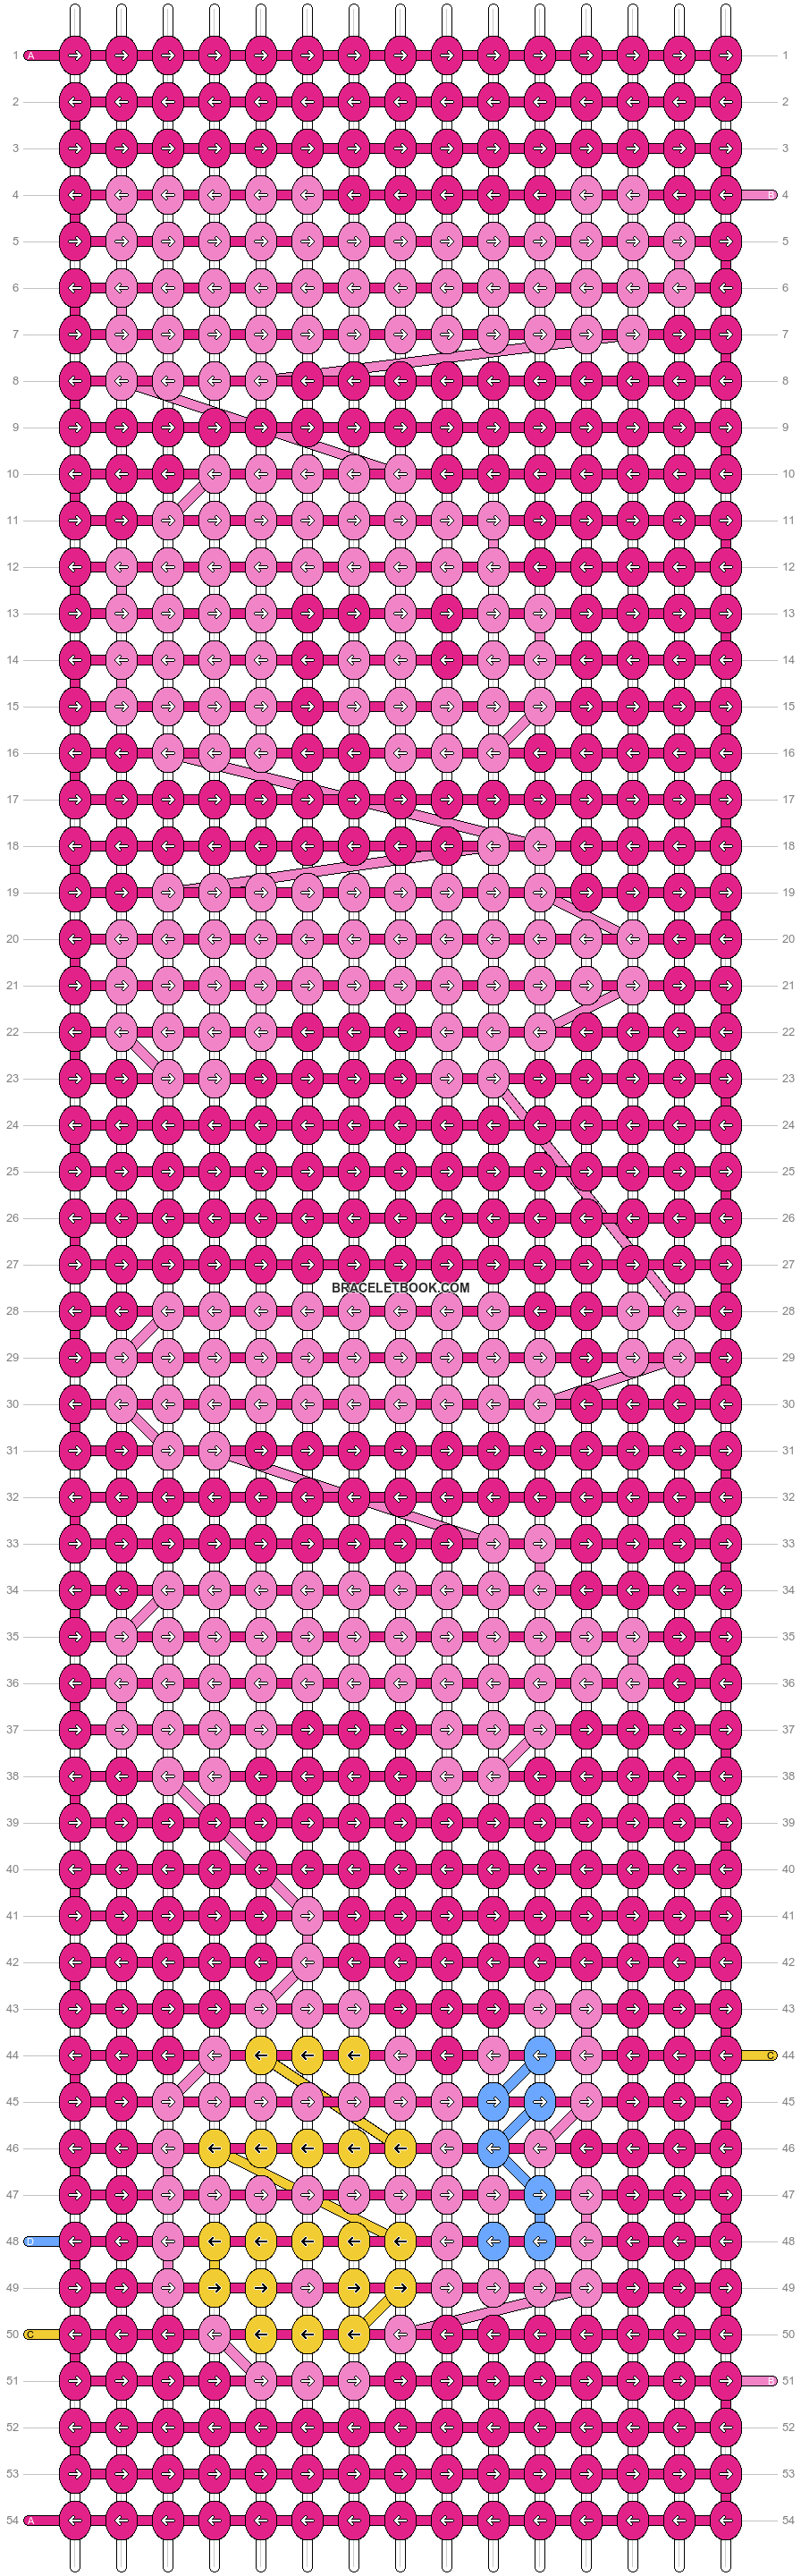 Alpha pattern #40595 variation #52217 pattern